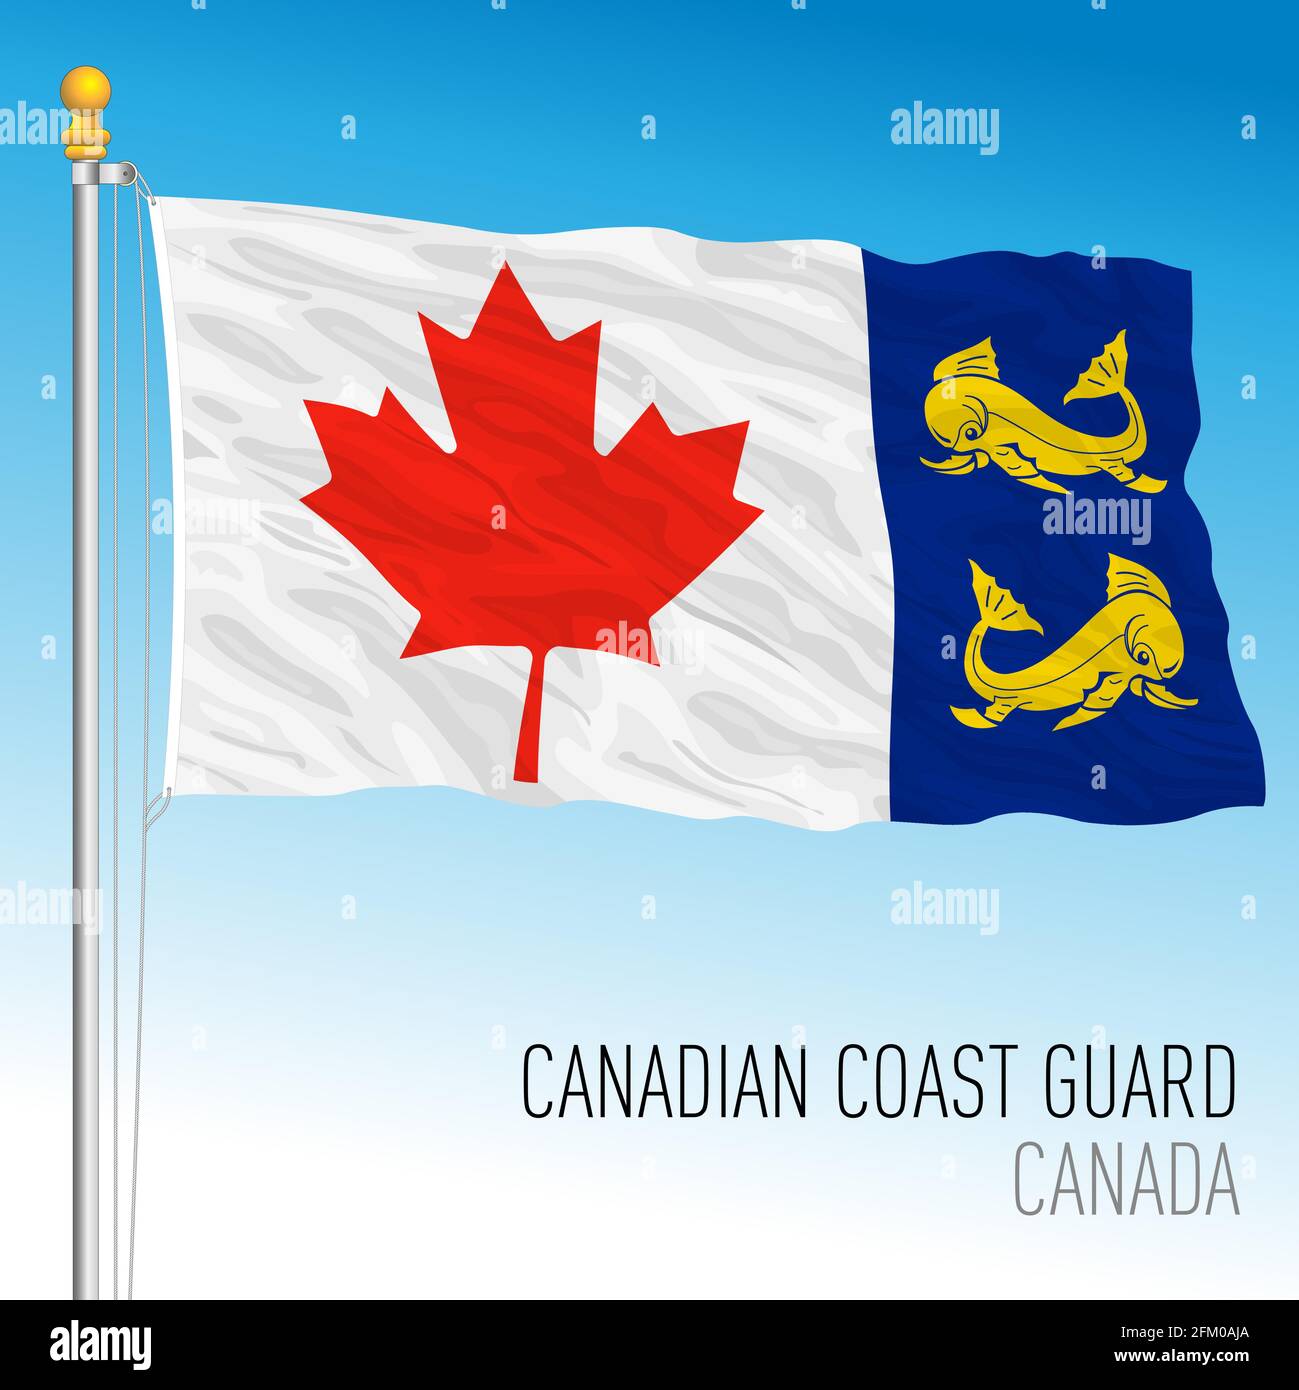 Canadian Coast Guard flag, Canada, north american country, vector illustration Stock Vector